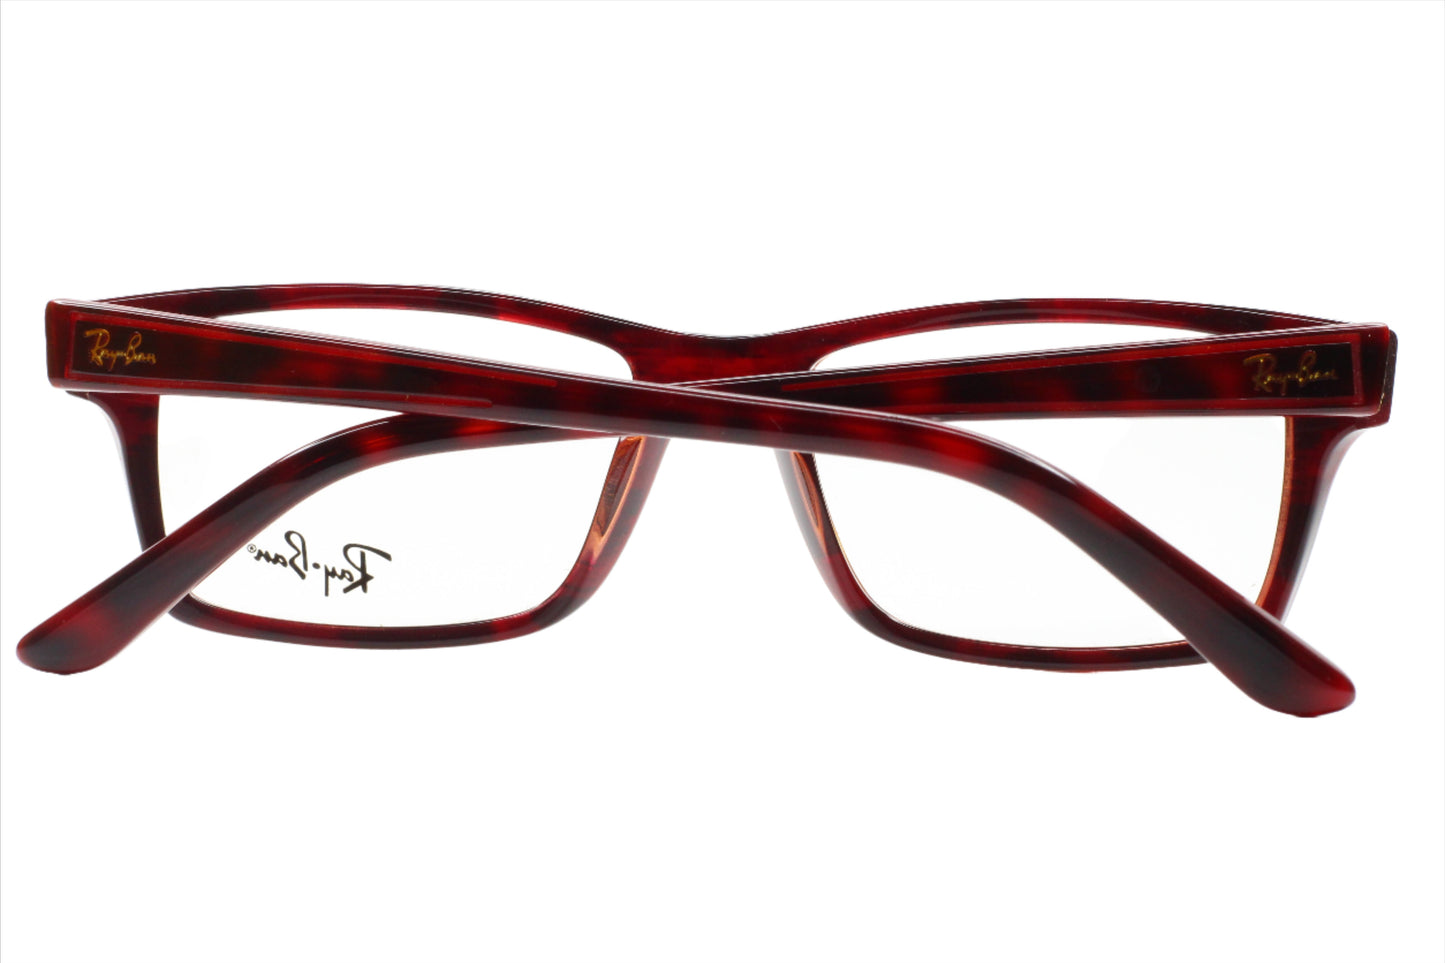 Ray-Ban RB5225 5034 Red Havana Acetate Rectangular Eyeglasses